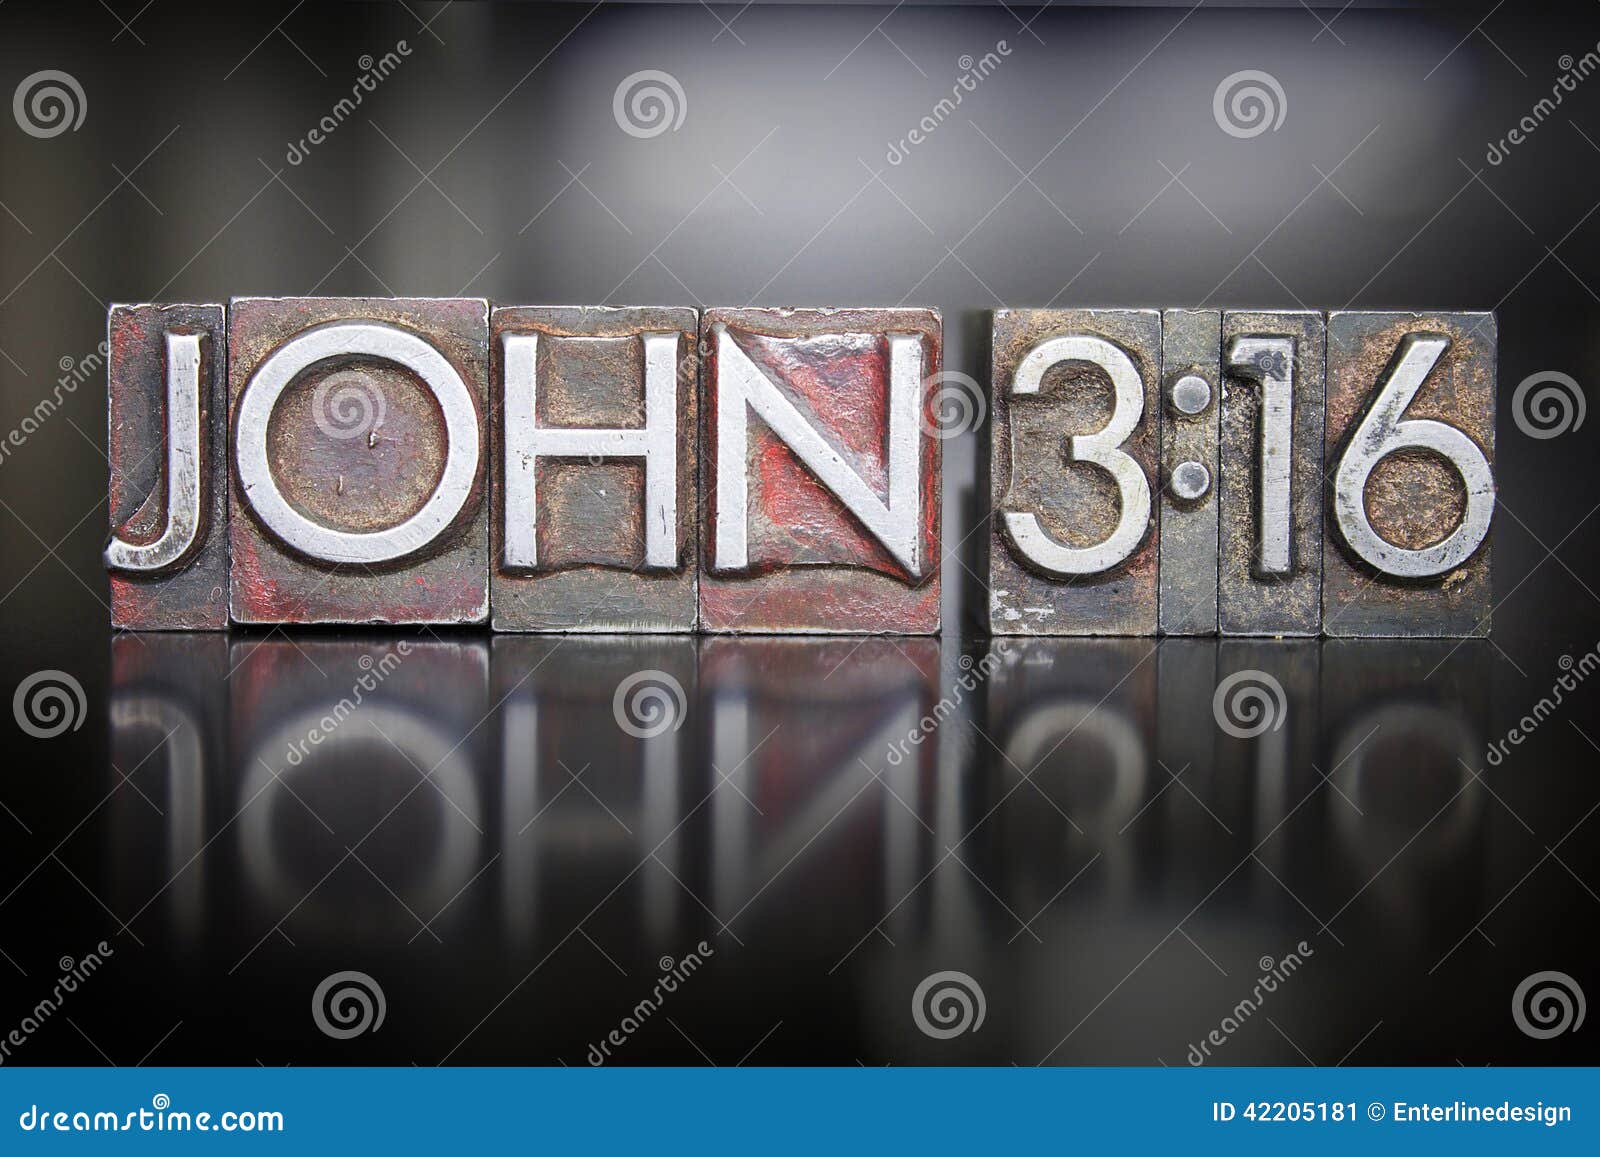 john 3:16 letterpress